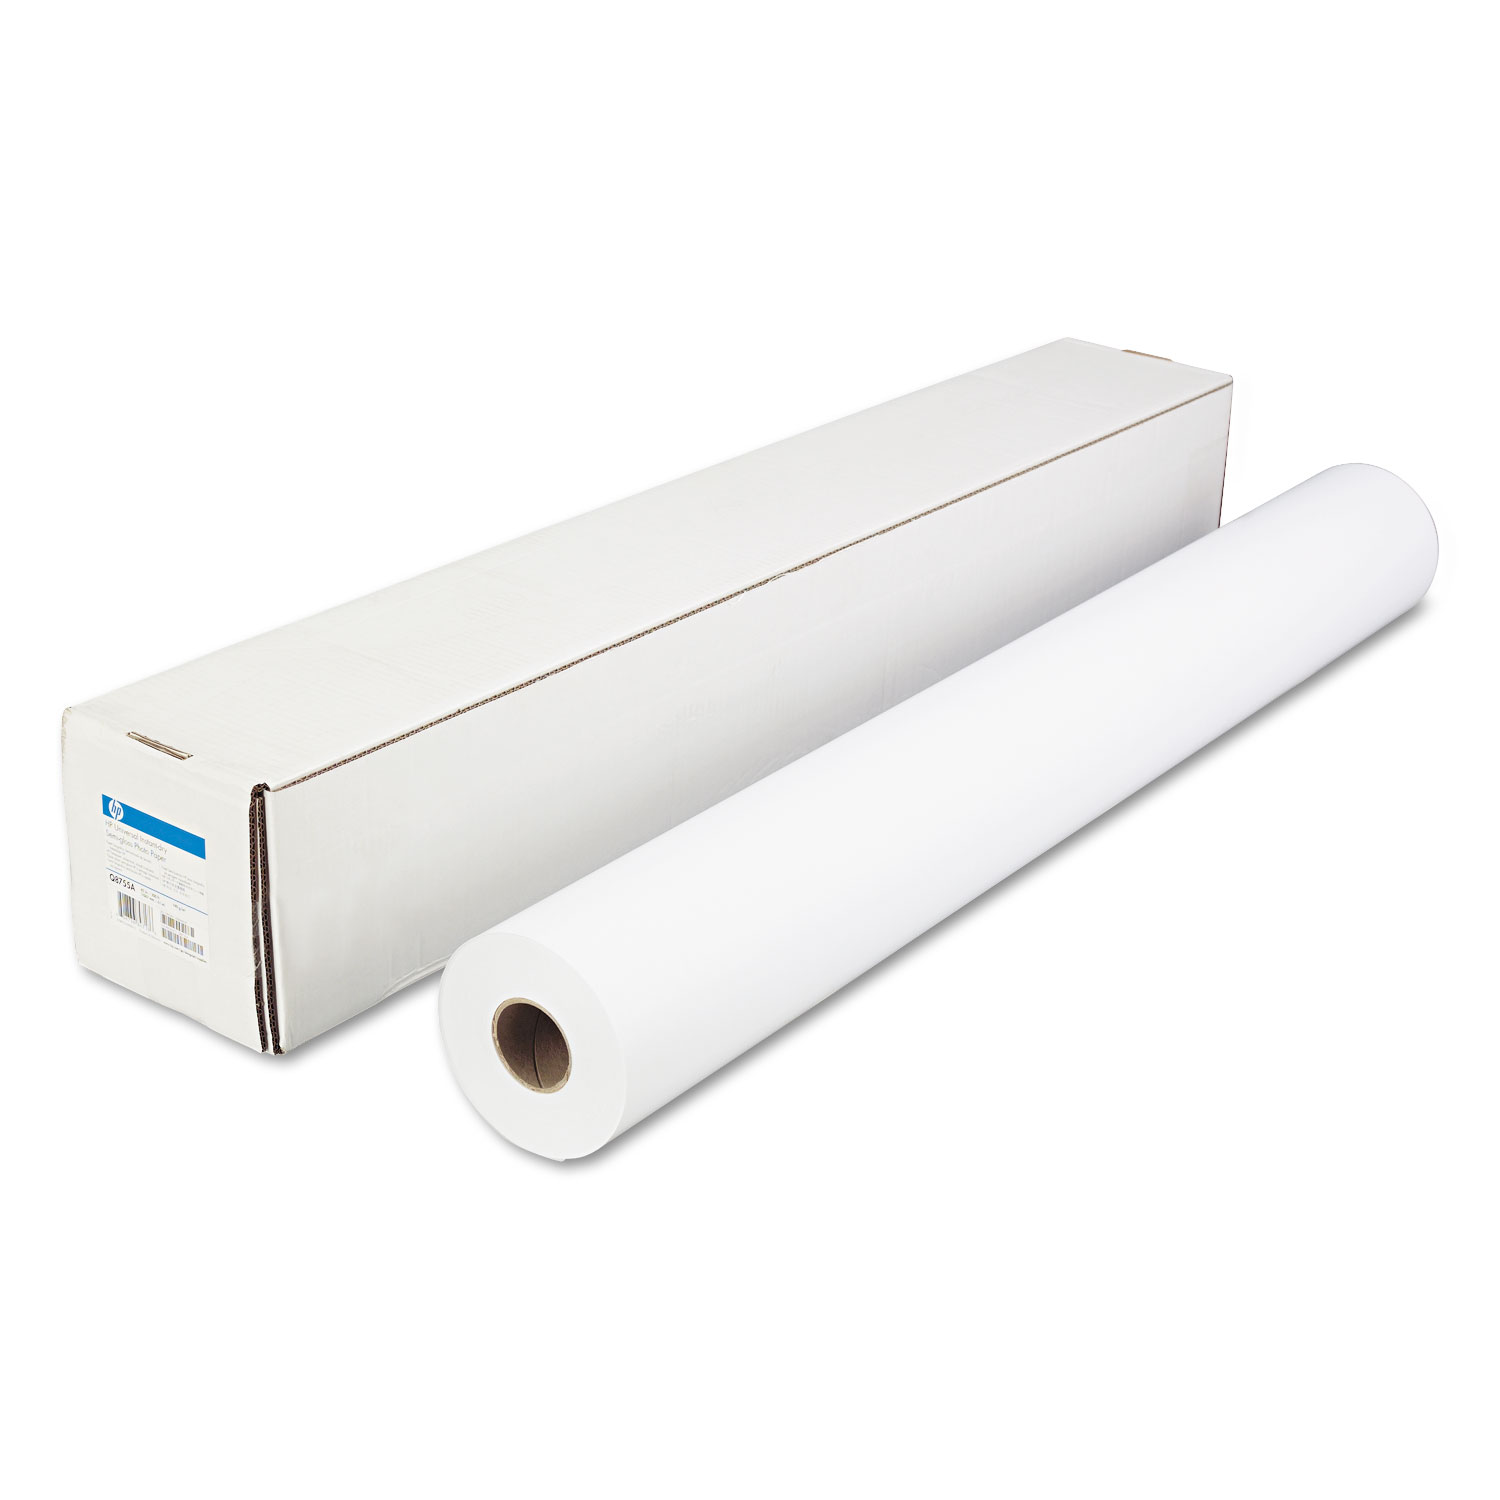  HP Q8755A Universal Instant-Dry Photo Paper, 7.4 mil, 42 x 200 ft, Semi-Gloss White (HEWQ8755A) 